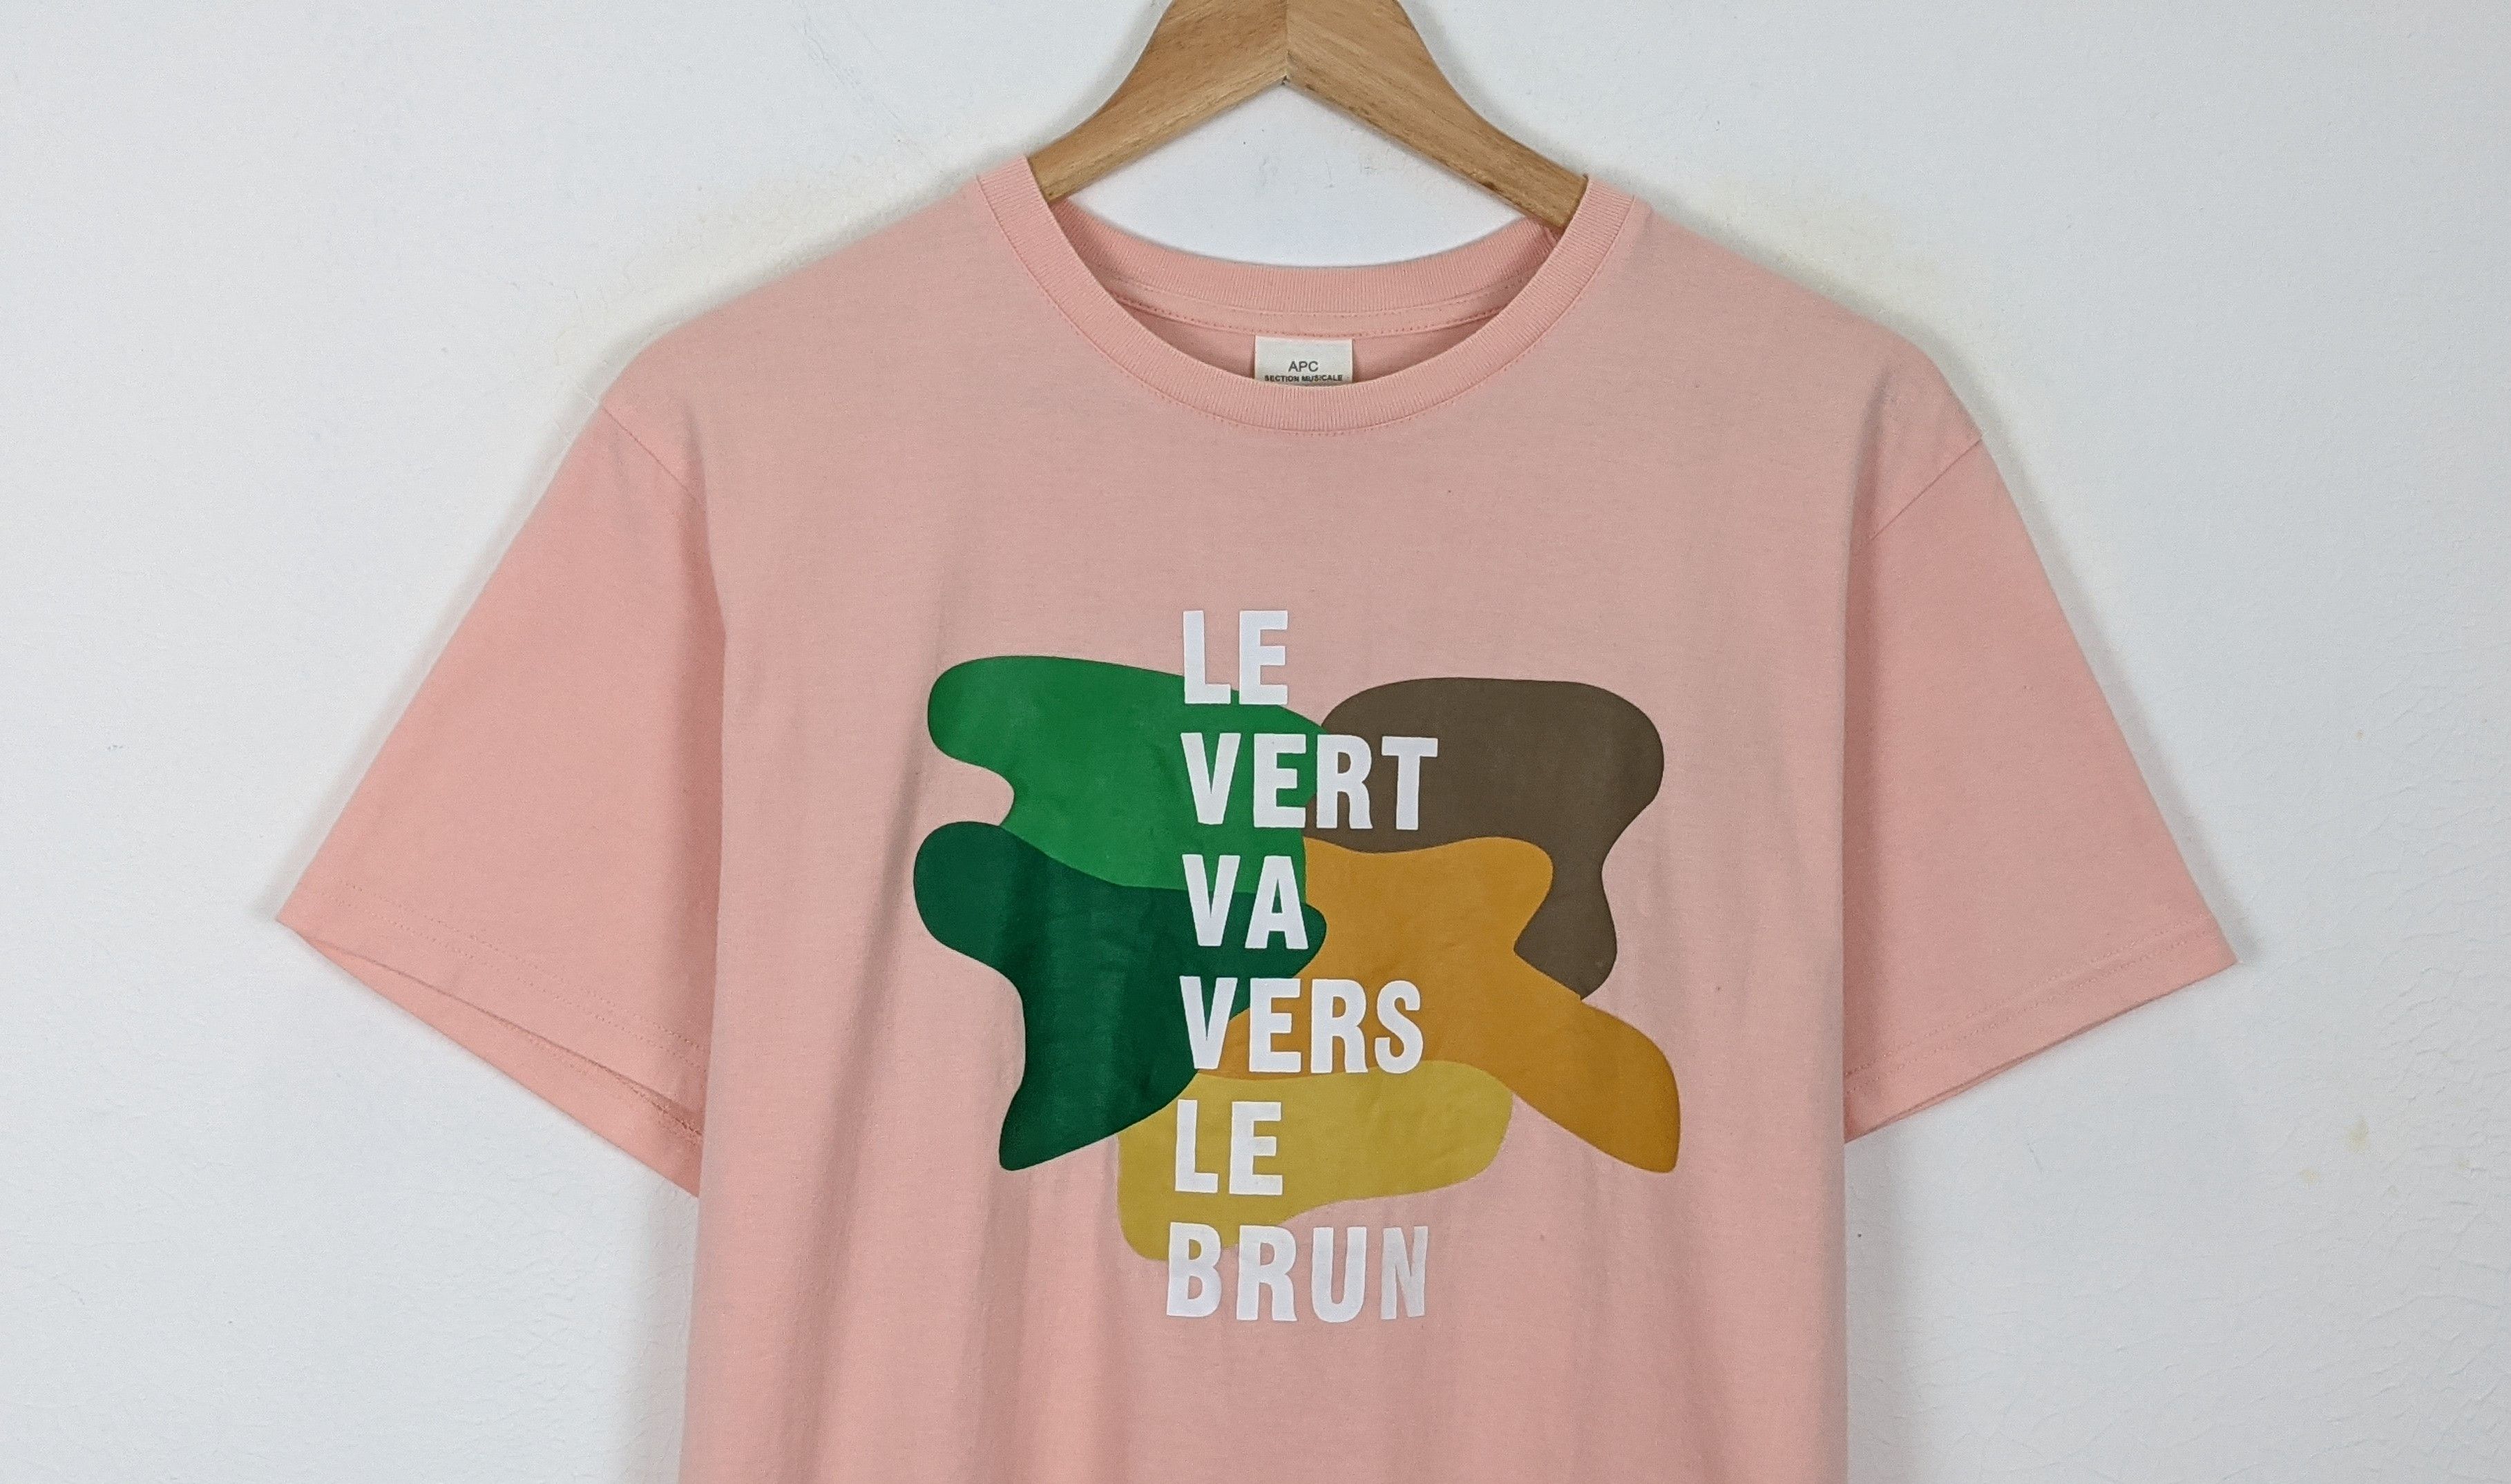 APC Le Vert Va Vers Le Brun Shirt - 2